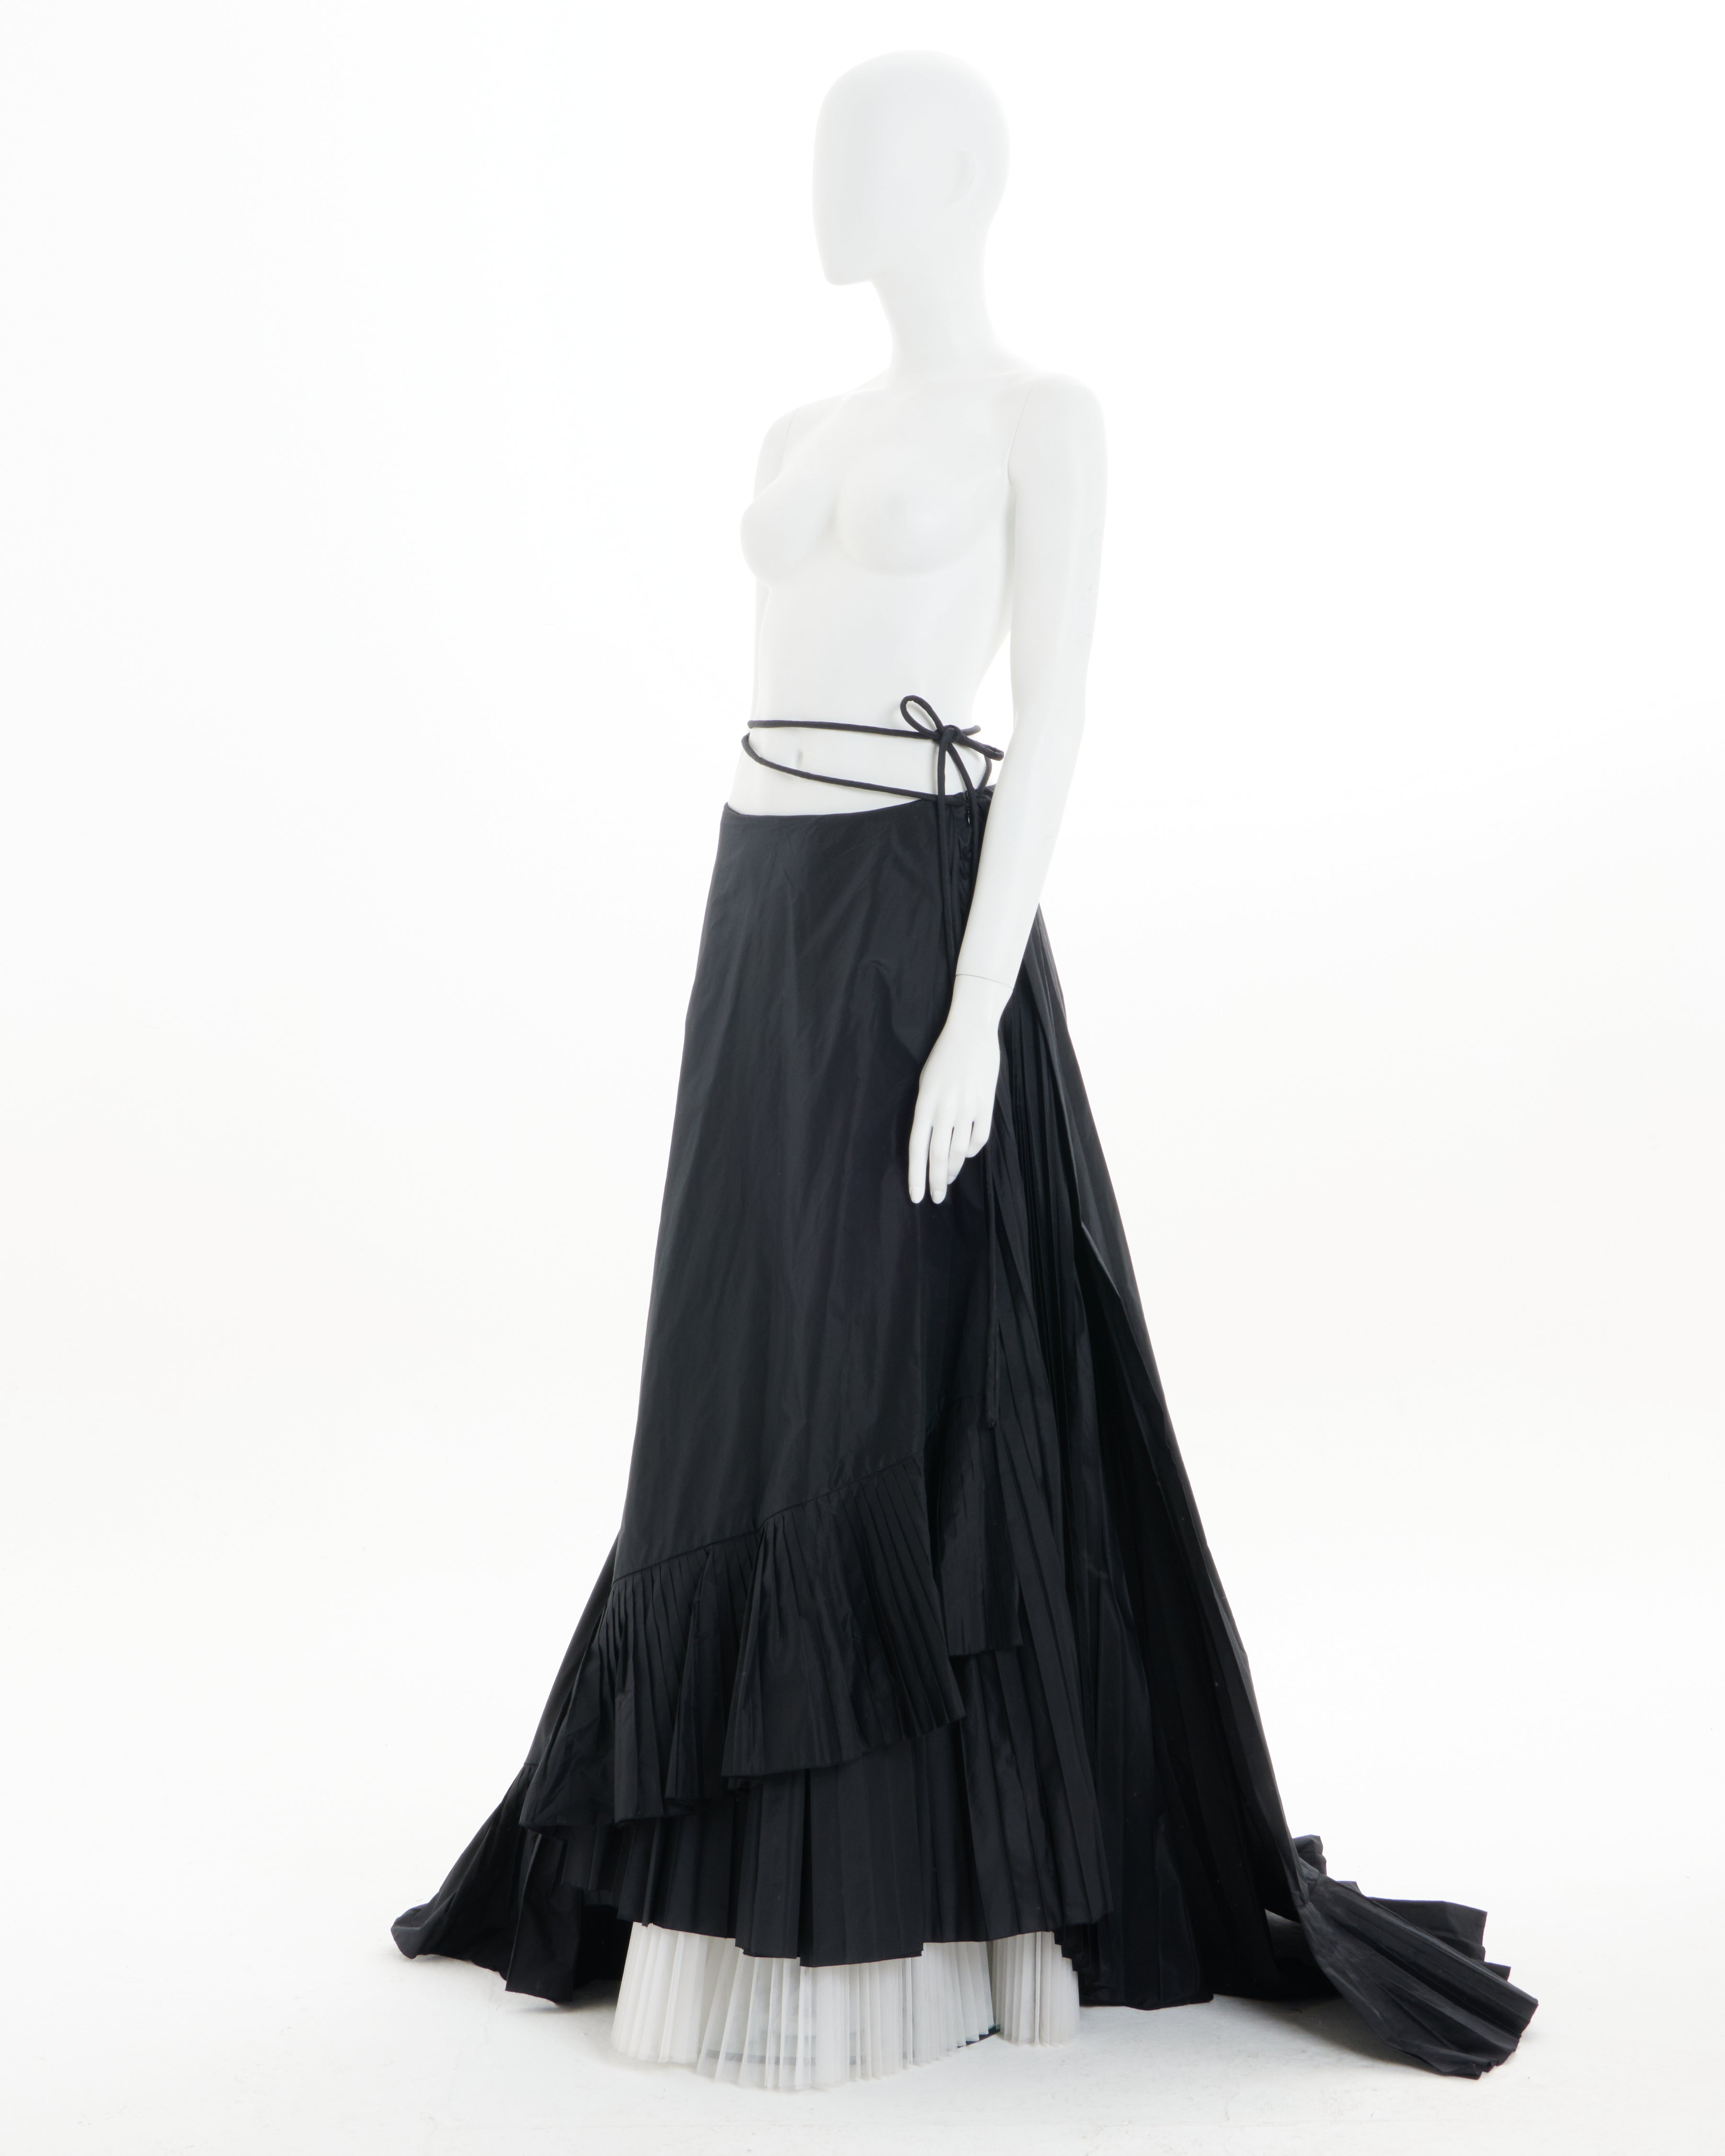 Gianfranco Ferrè F/W 2000 Black plated silk taffetà evening skirt 